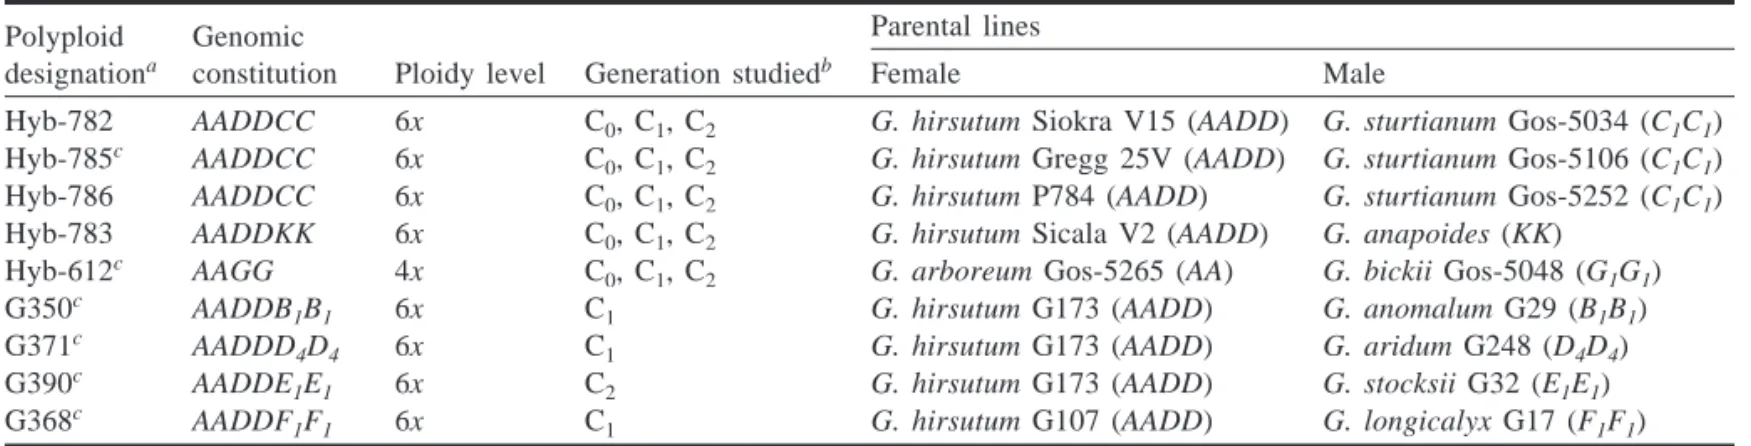 Table 1. Synthetic Gossypium amphiploids surveyed for non-Mendelian genomic alterations.